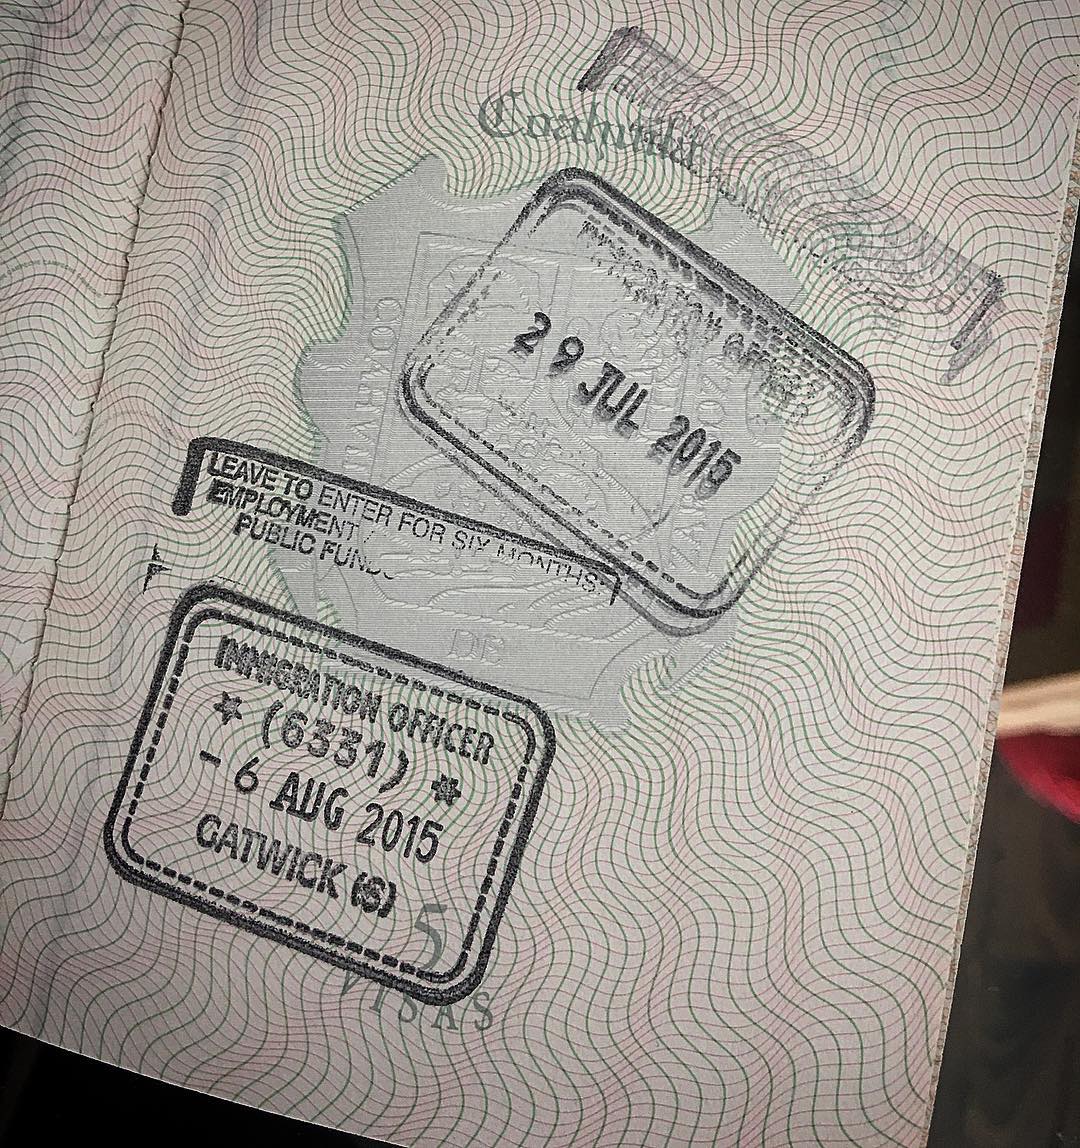 phan-biet-ro-passport-va-visa-de-khong-con-nham-lan-trong-nhung-chuyen-di-11